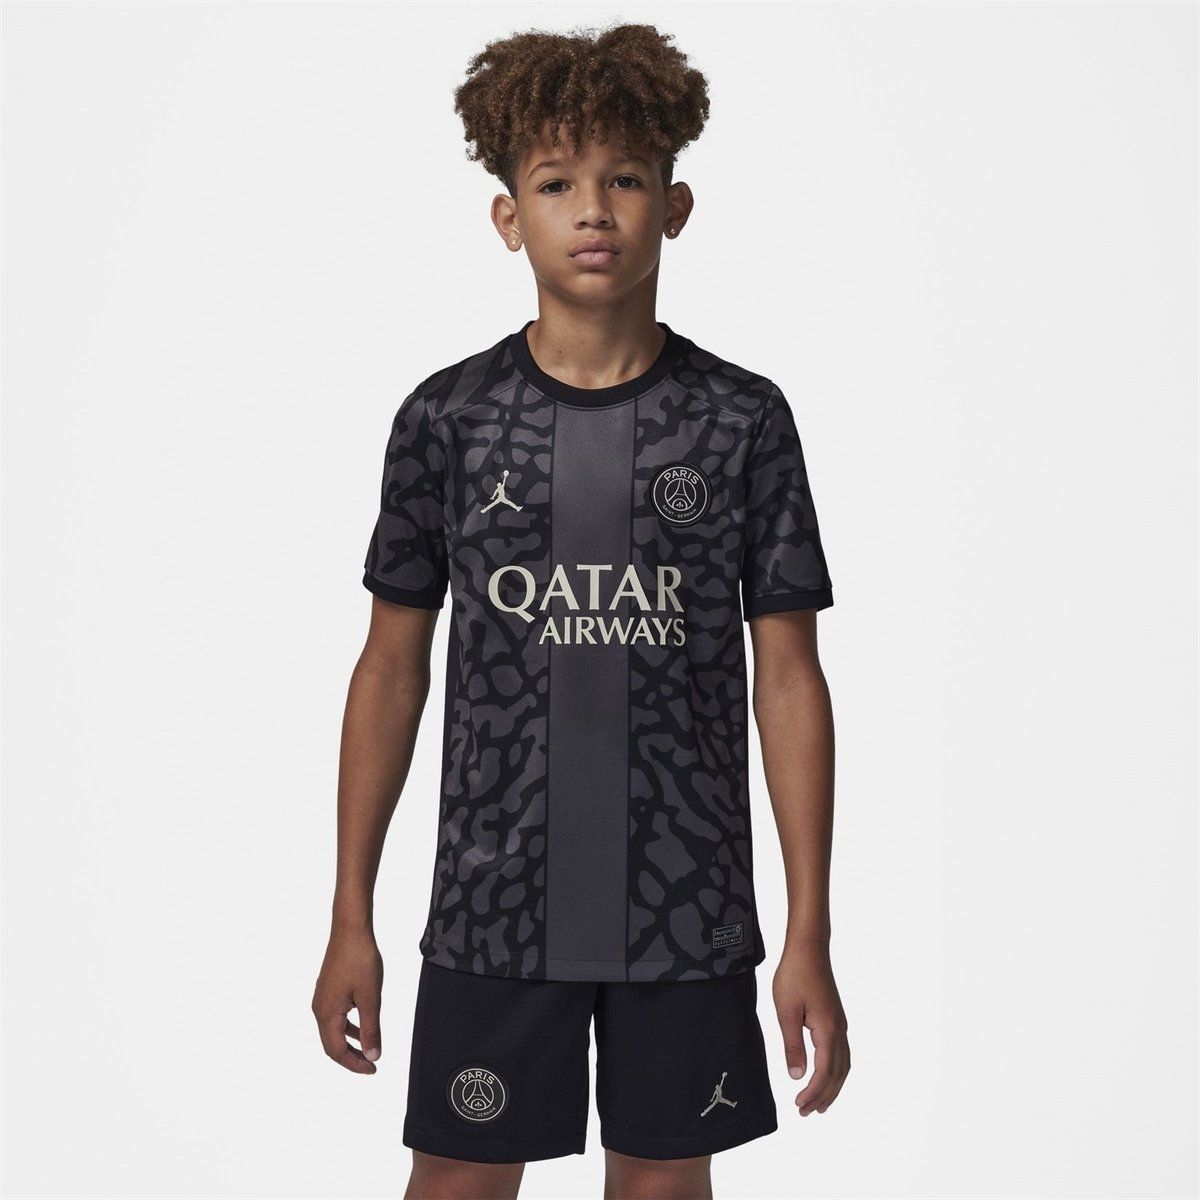 Kids Football Shirts & Kits - Lovell Soccer